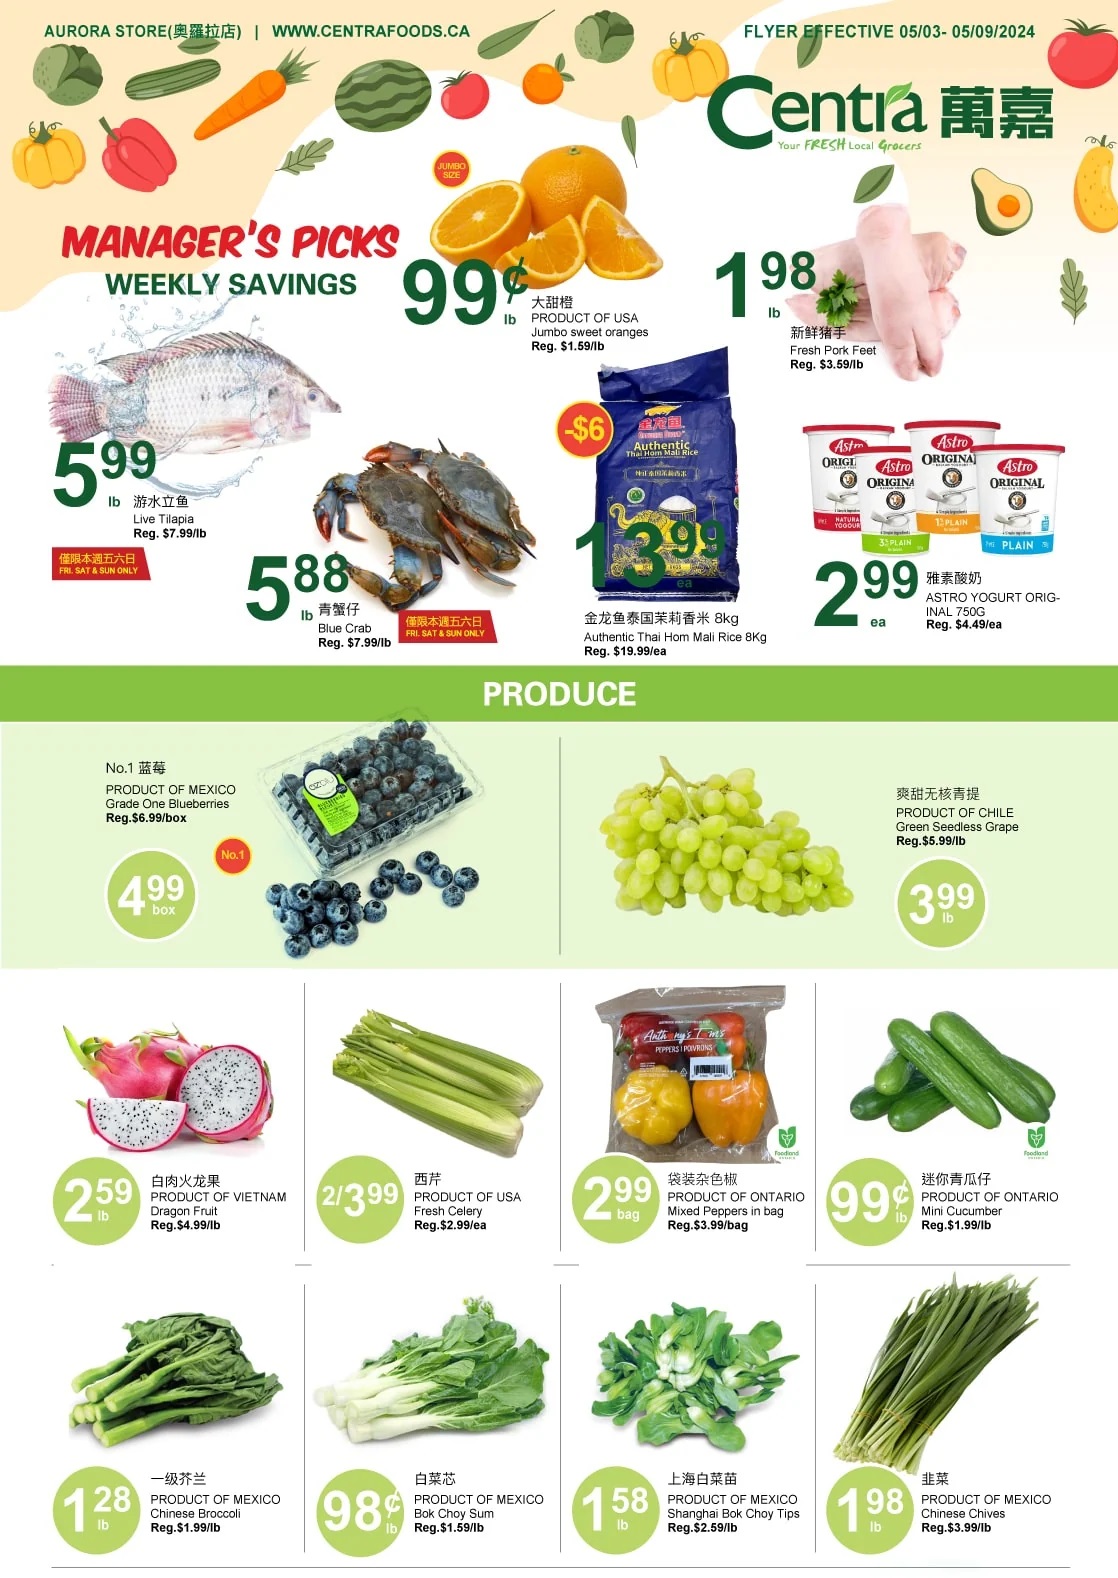 Centra Food Market - Aurora - Weekly Flyer Specials